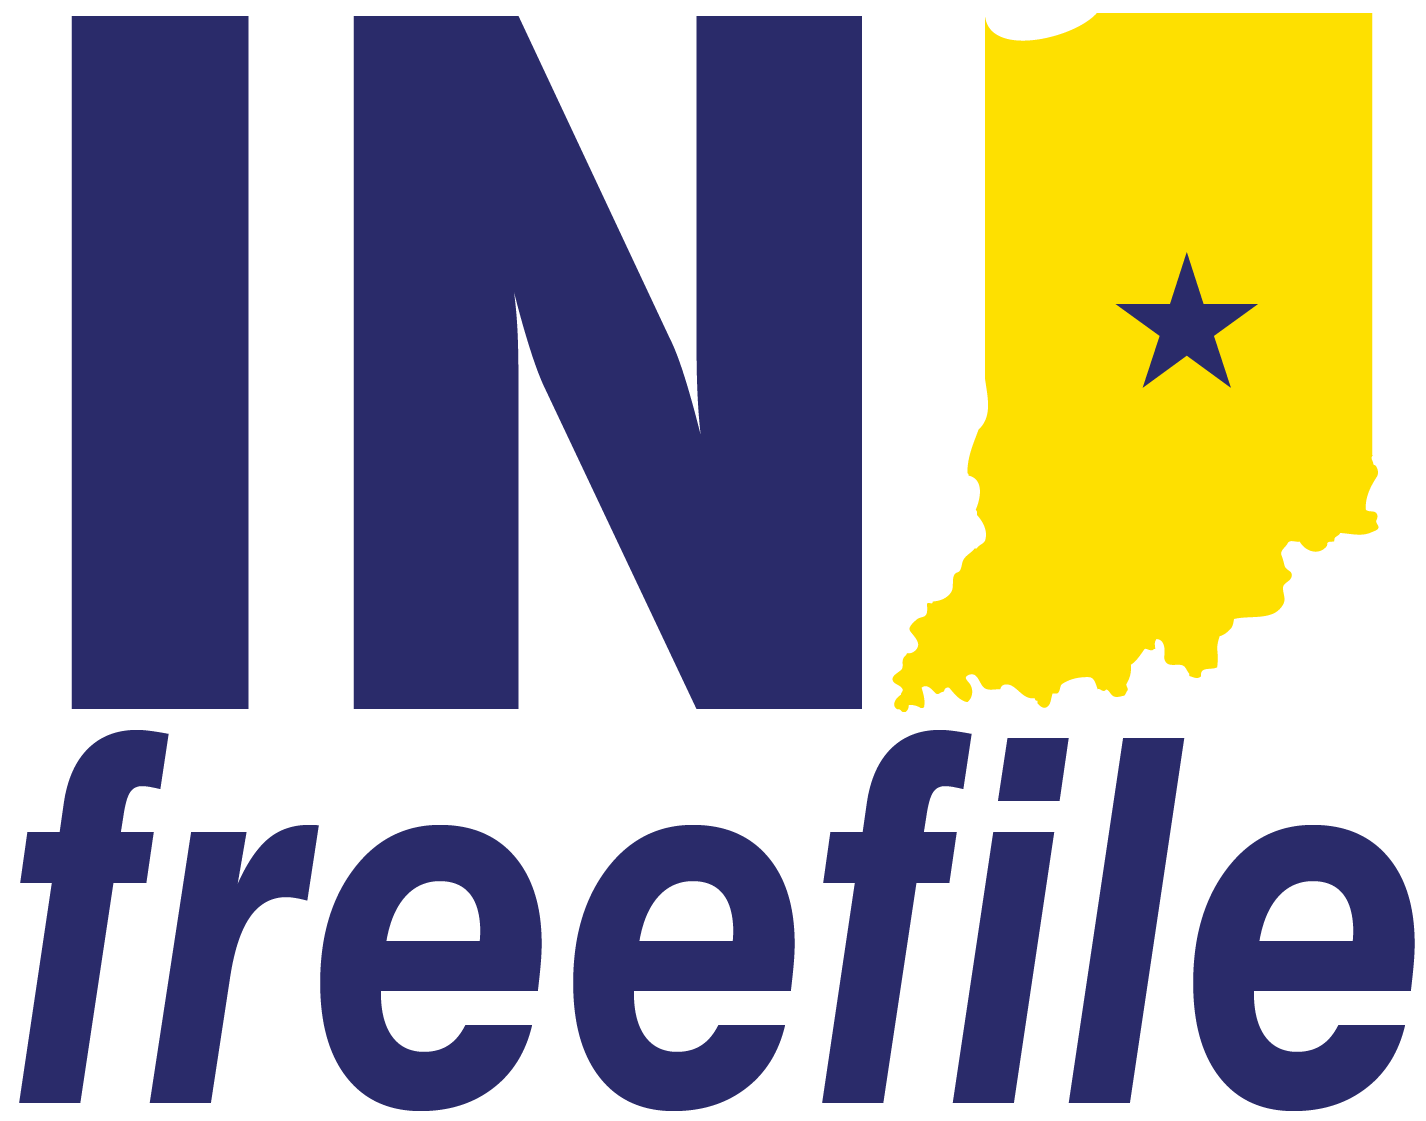 Indiana Free File logo